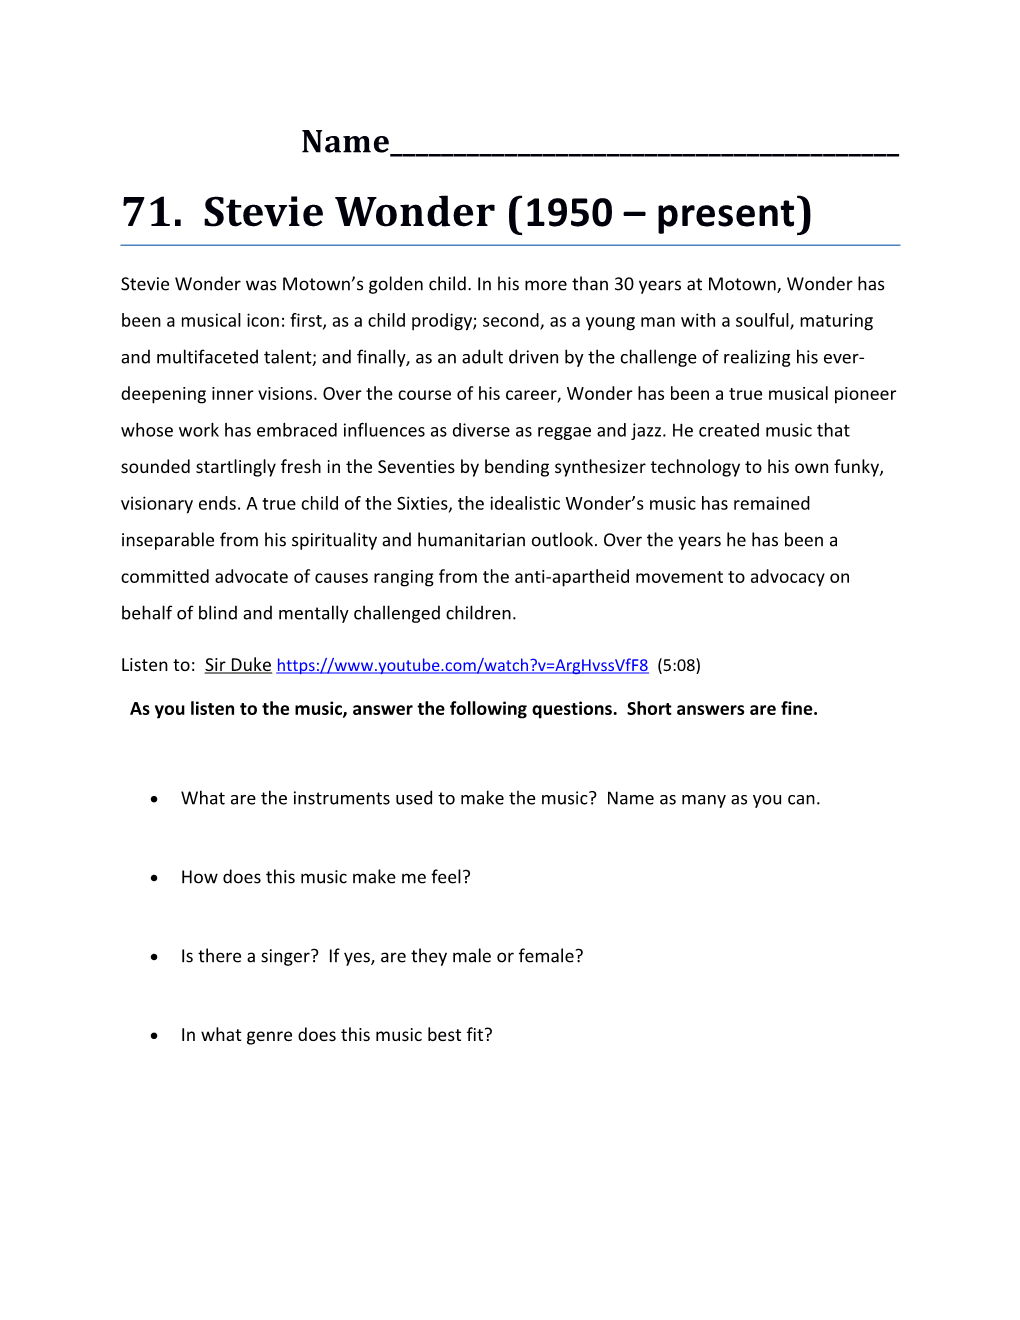 71. Stevie Wonder (1950 Present)